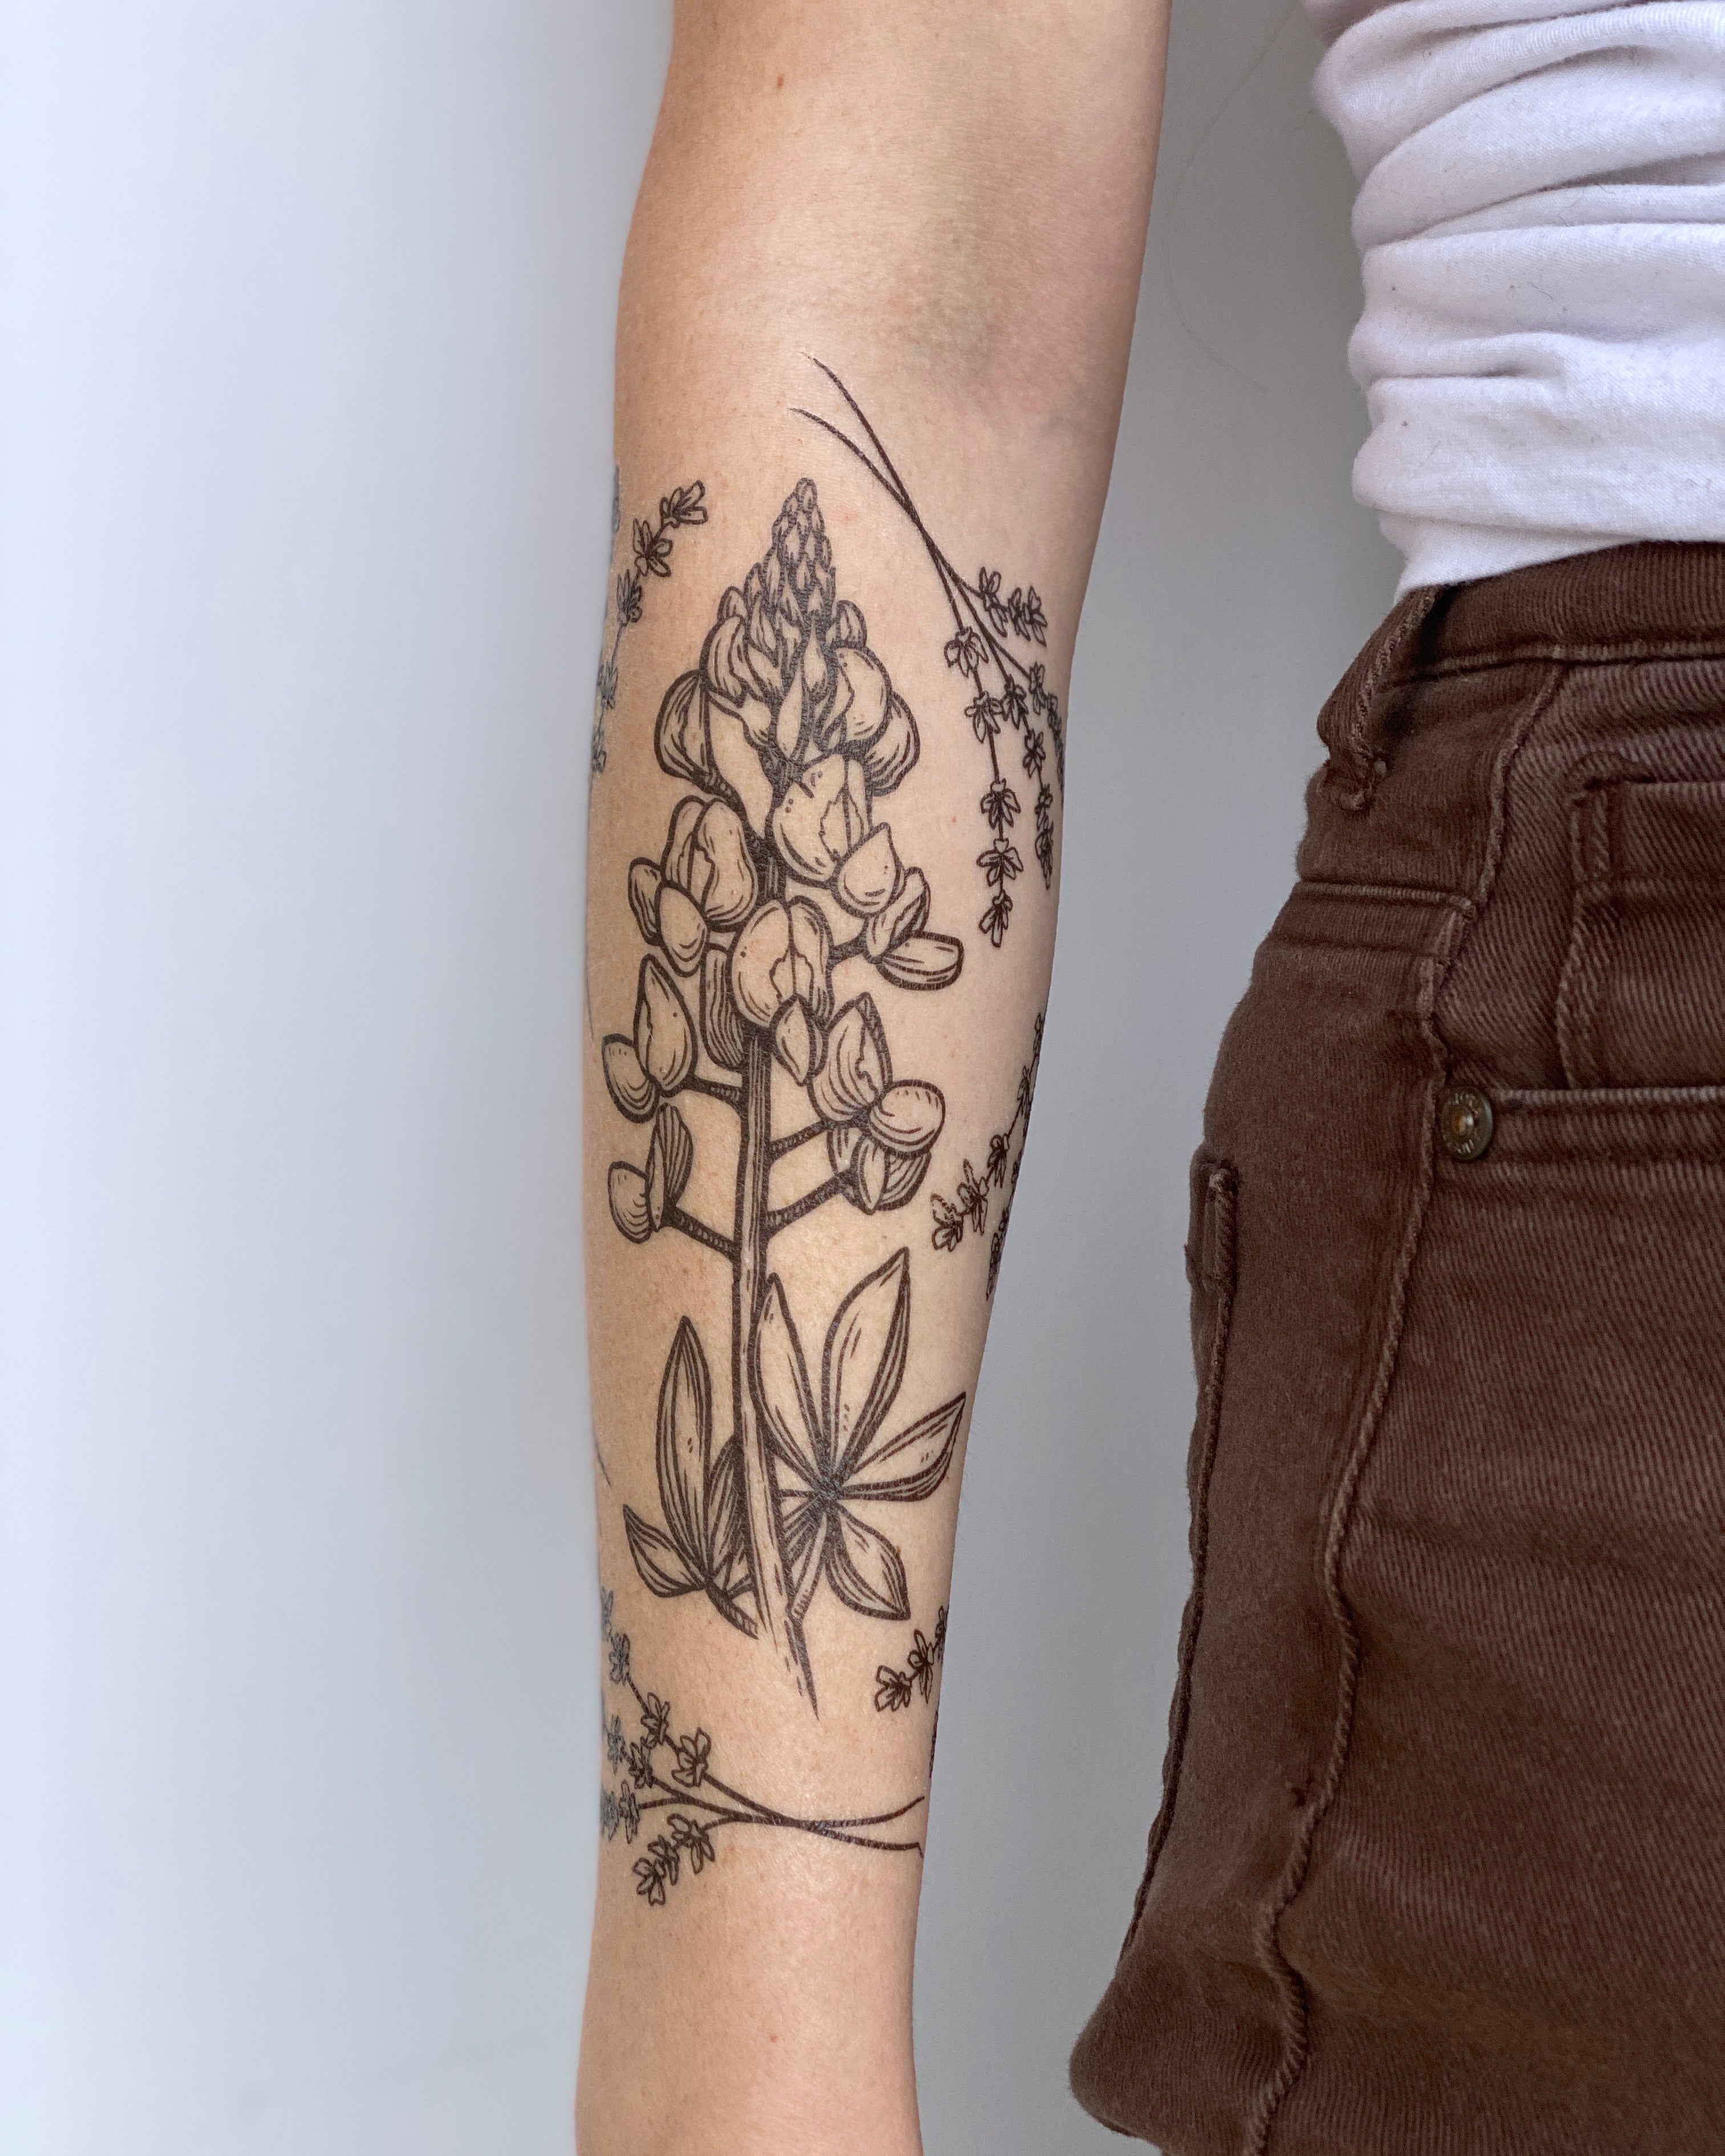 Tattoo tagged with flower small jakubnowicz tiny ankle little  nature minimalist heather illustrative  inkedappcom